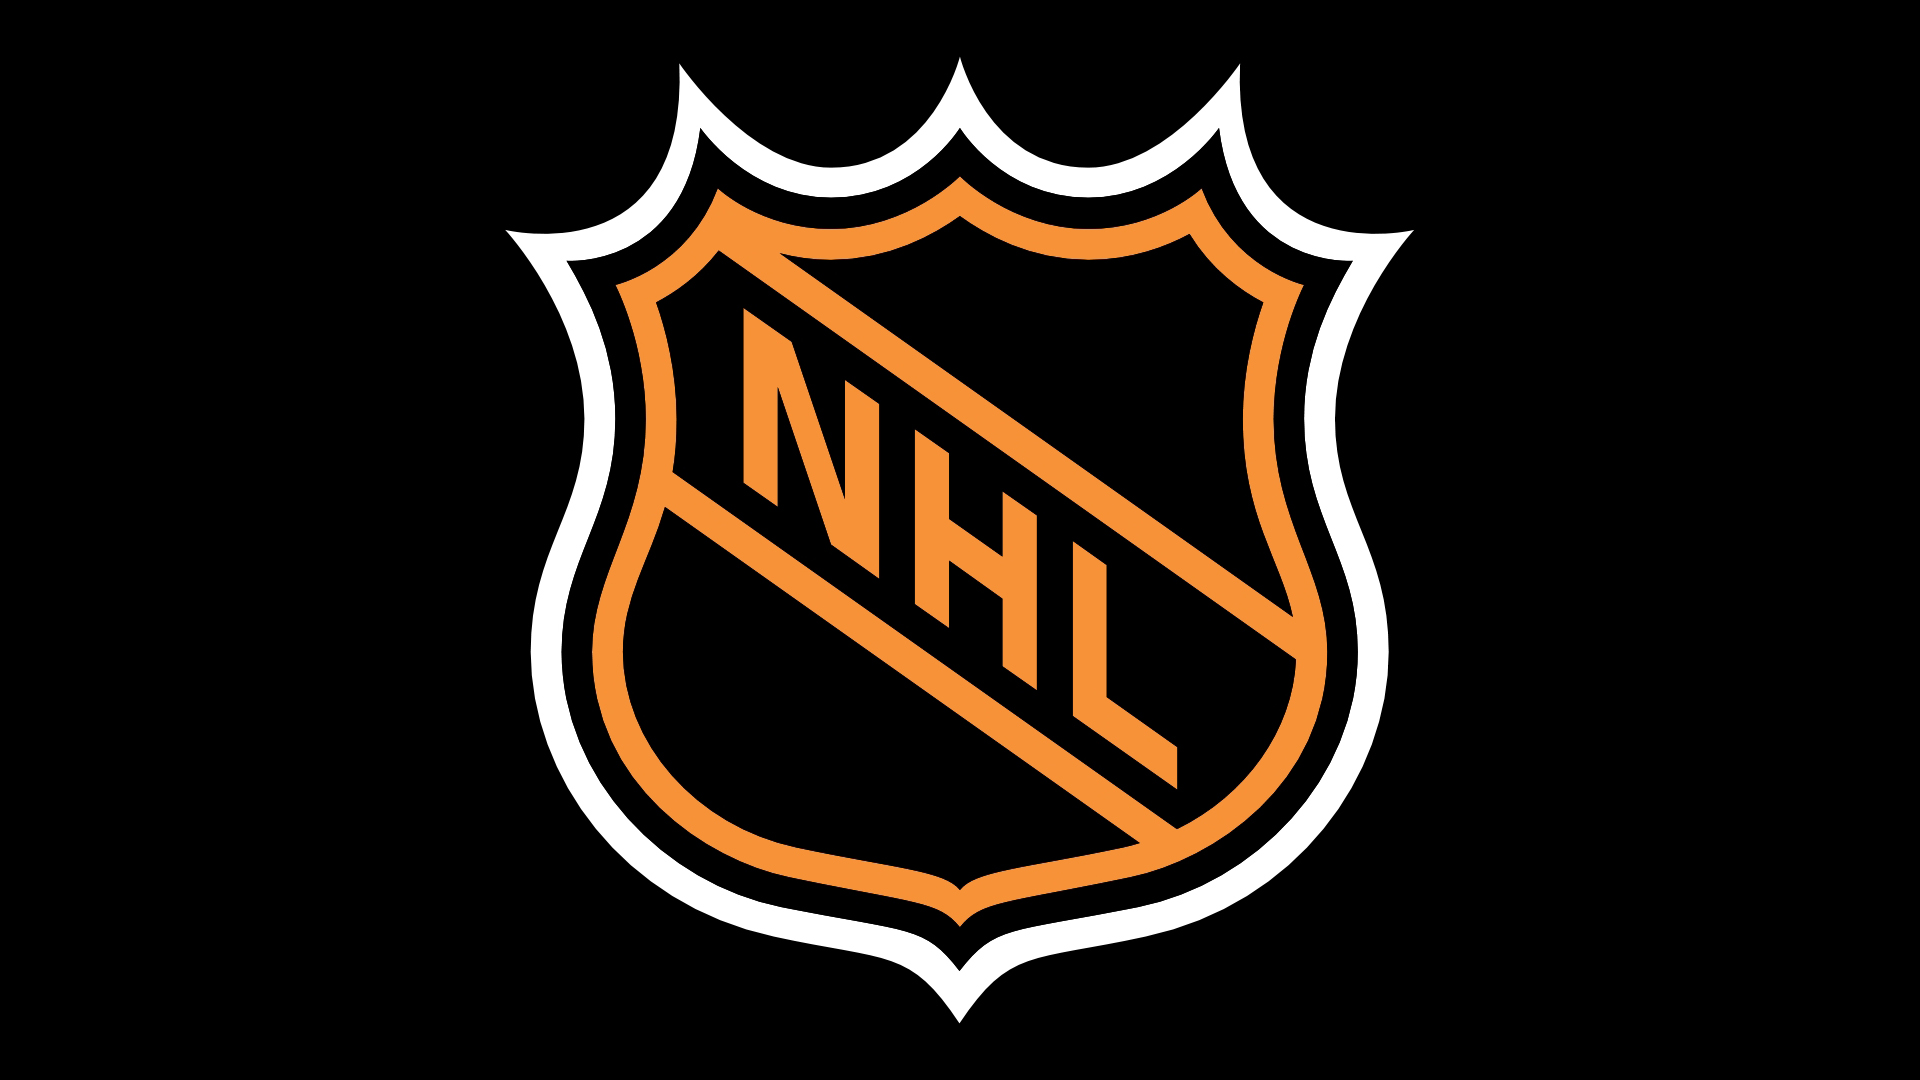 NHL On-demand addon for Kodi and XBMC